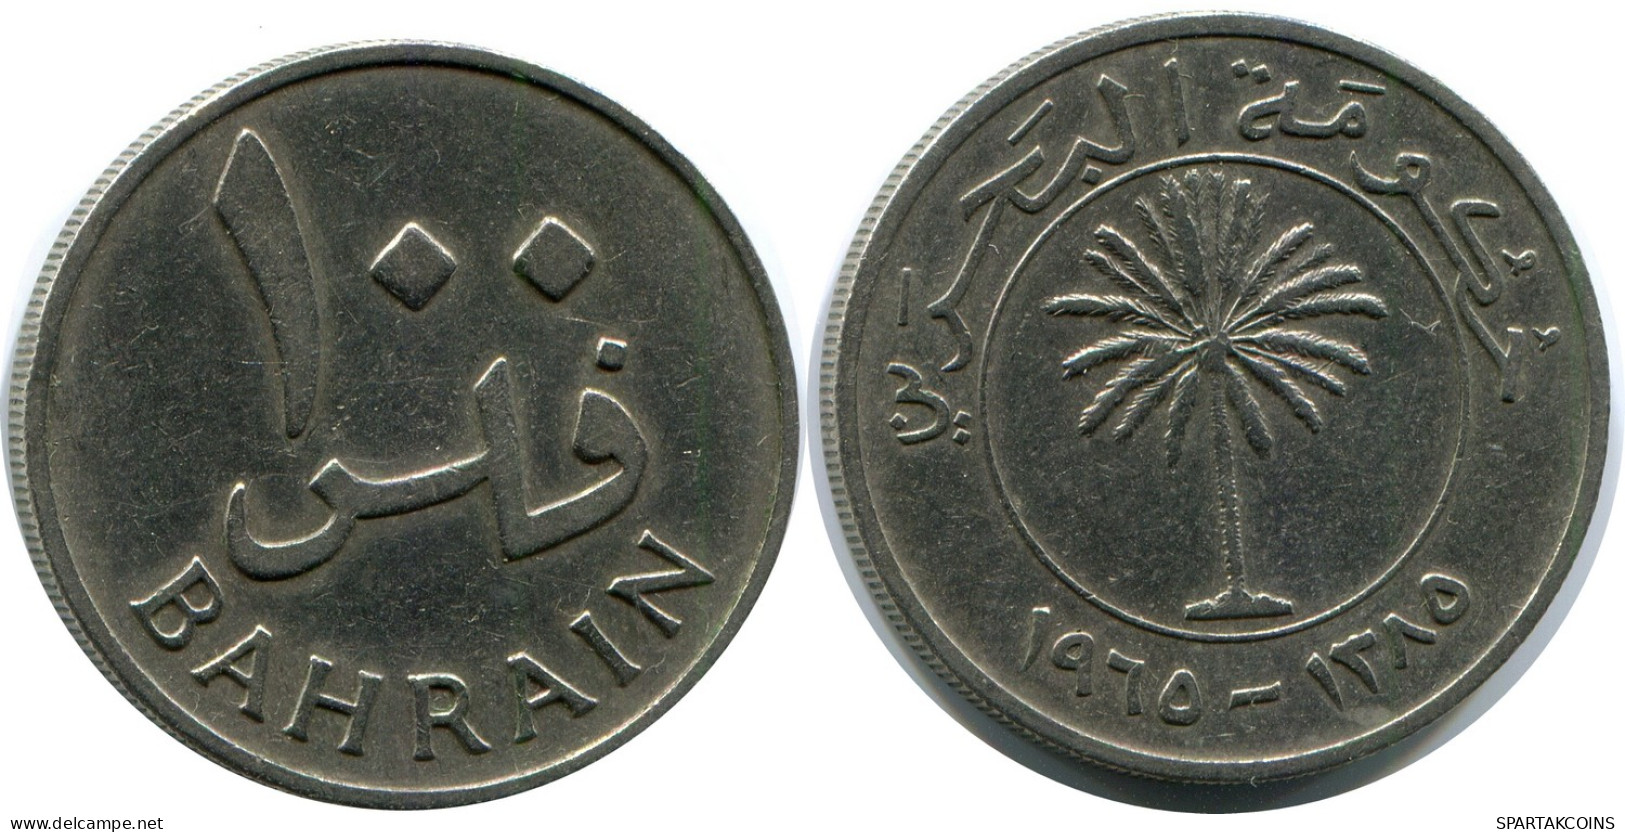 100 FILS 1970 BAHRAIN Coin #AP977.U - Bahrain